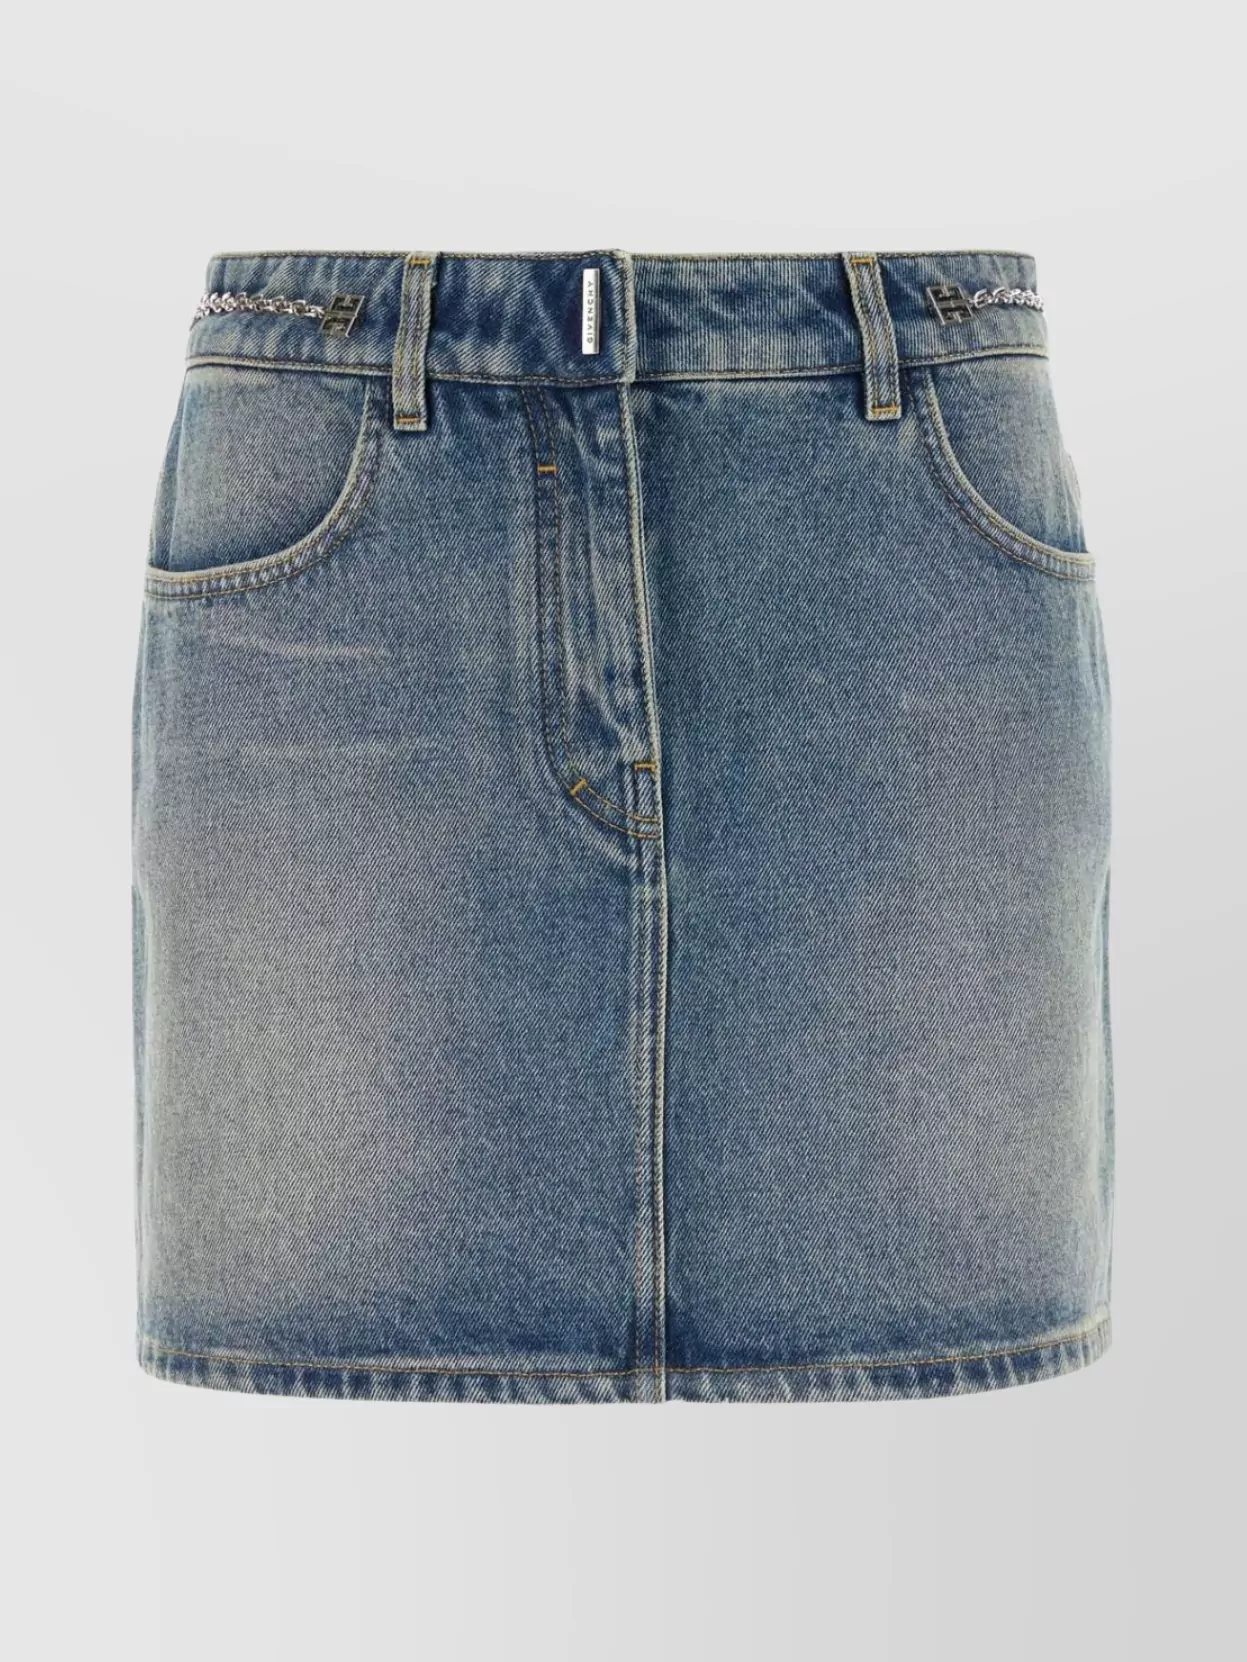 Shop Givenchy Denim Skirt With Back Pockets And Belt Loops